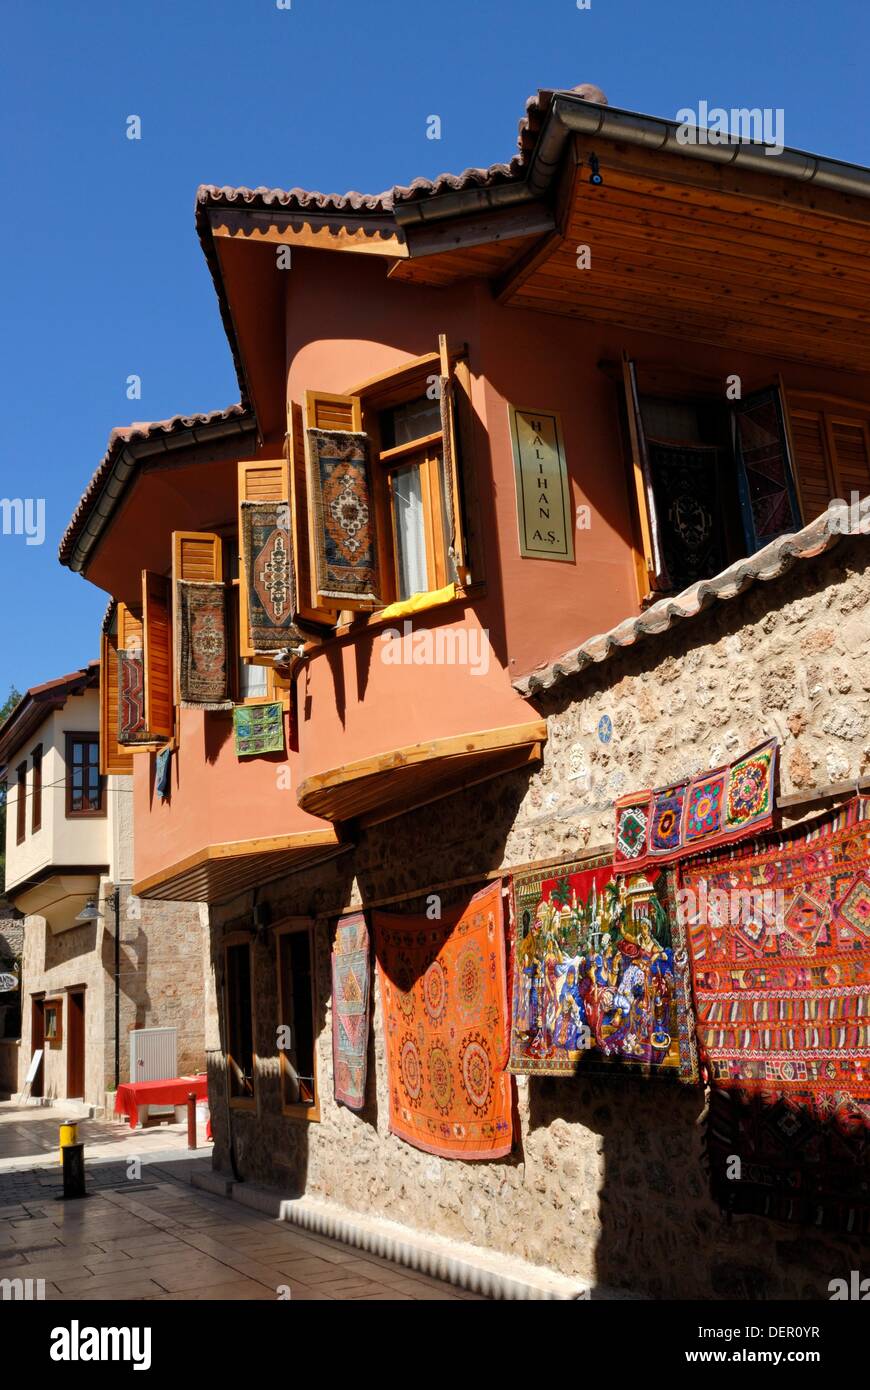 Kaleici, the old city center, Antalya, Turkey, Eurasia Stock Photo